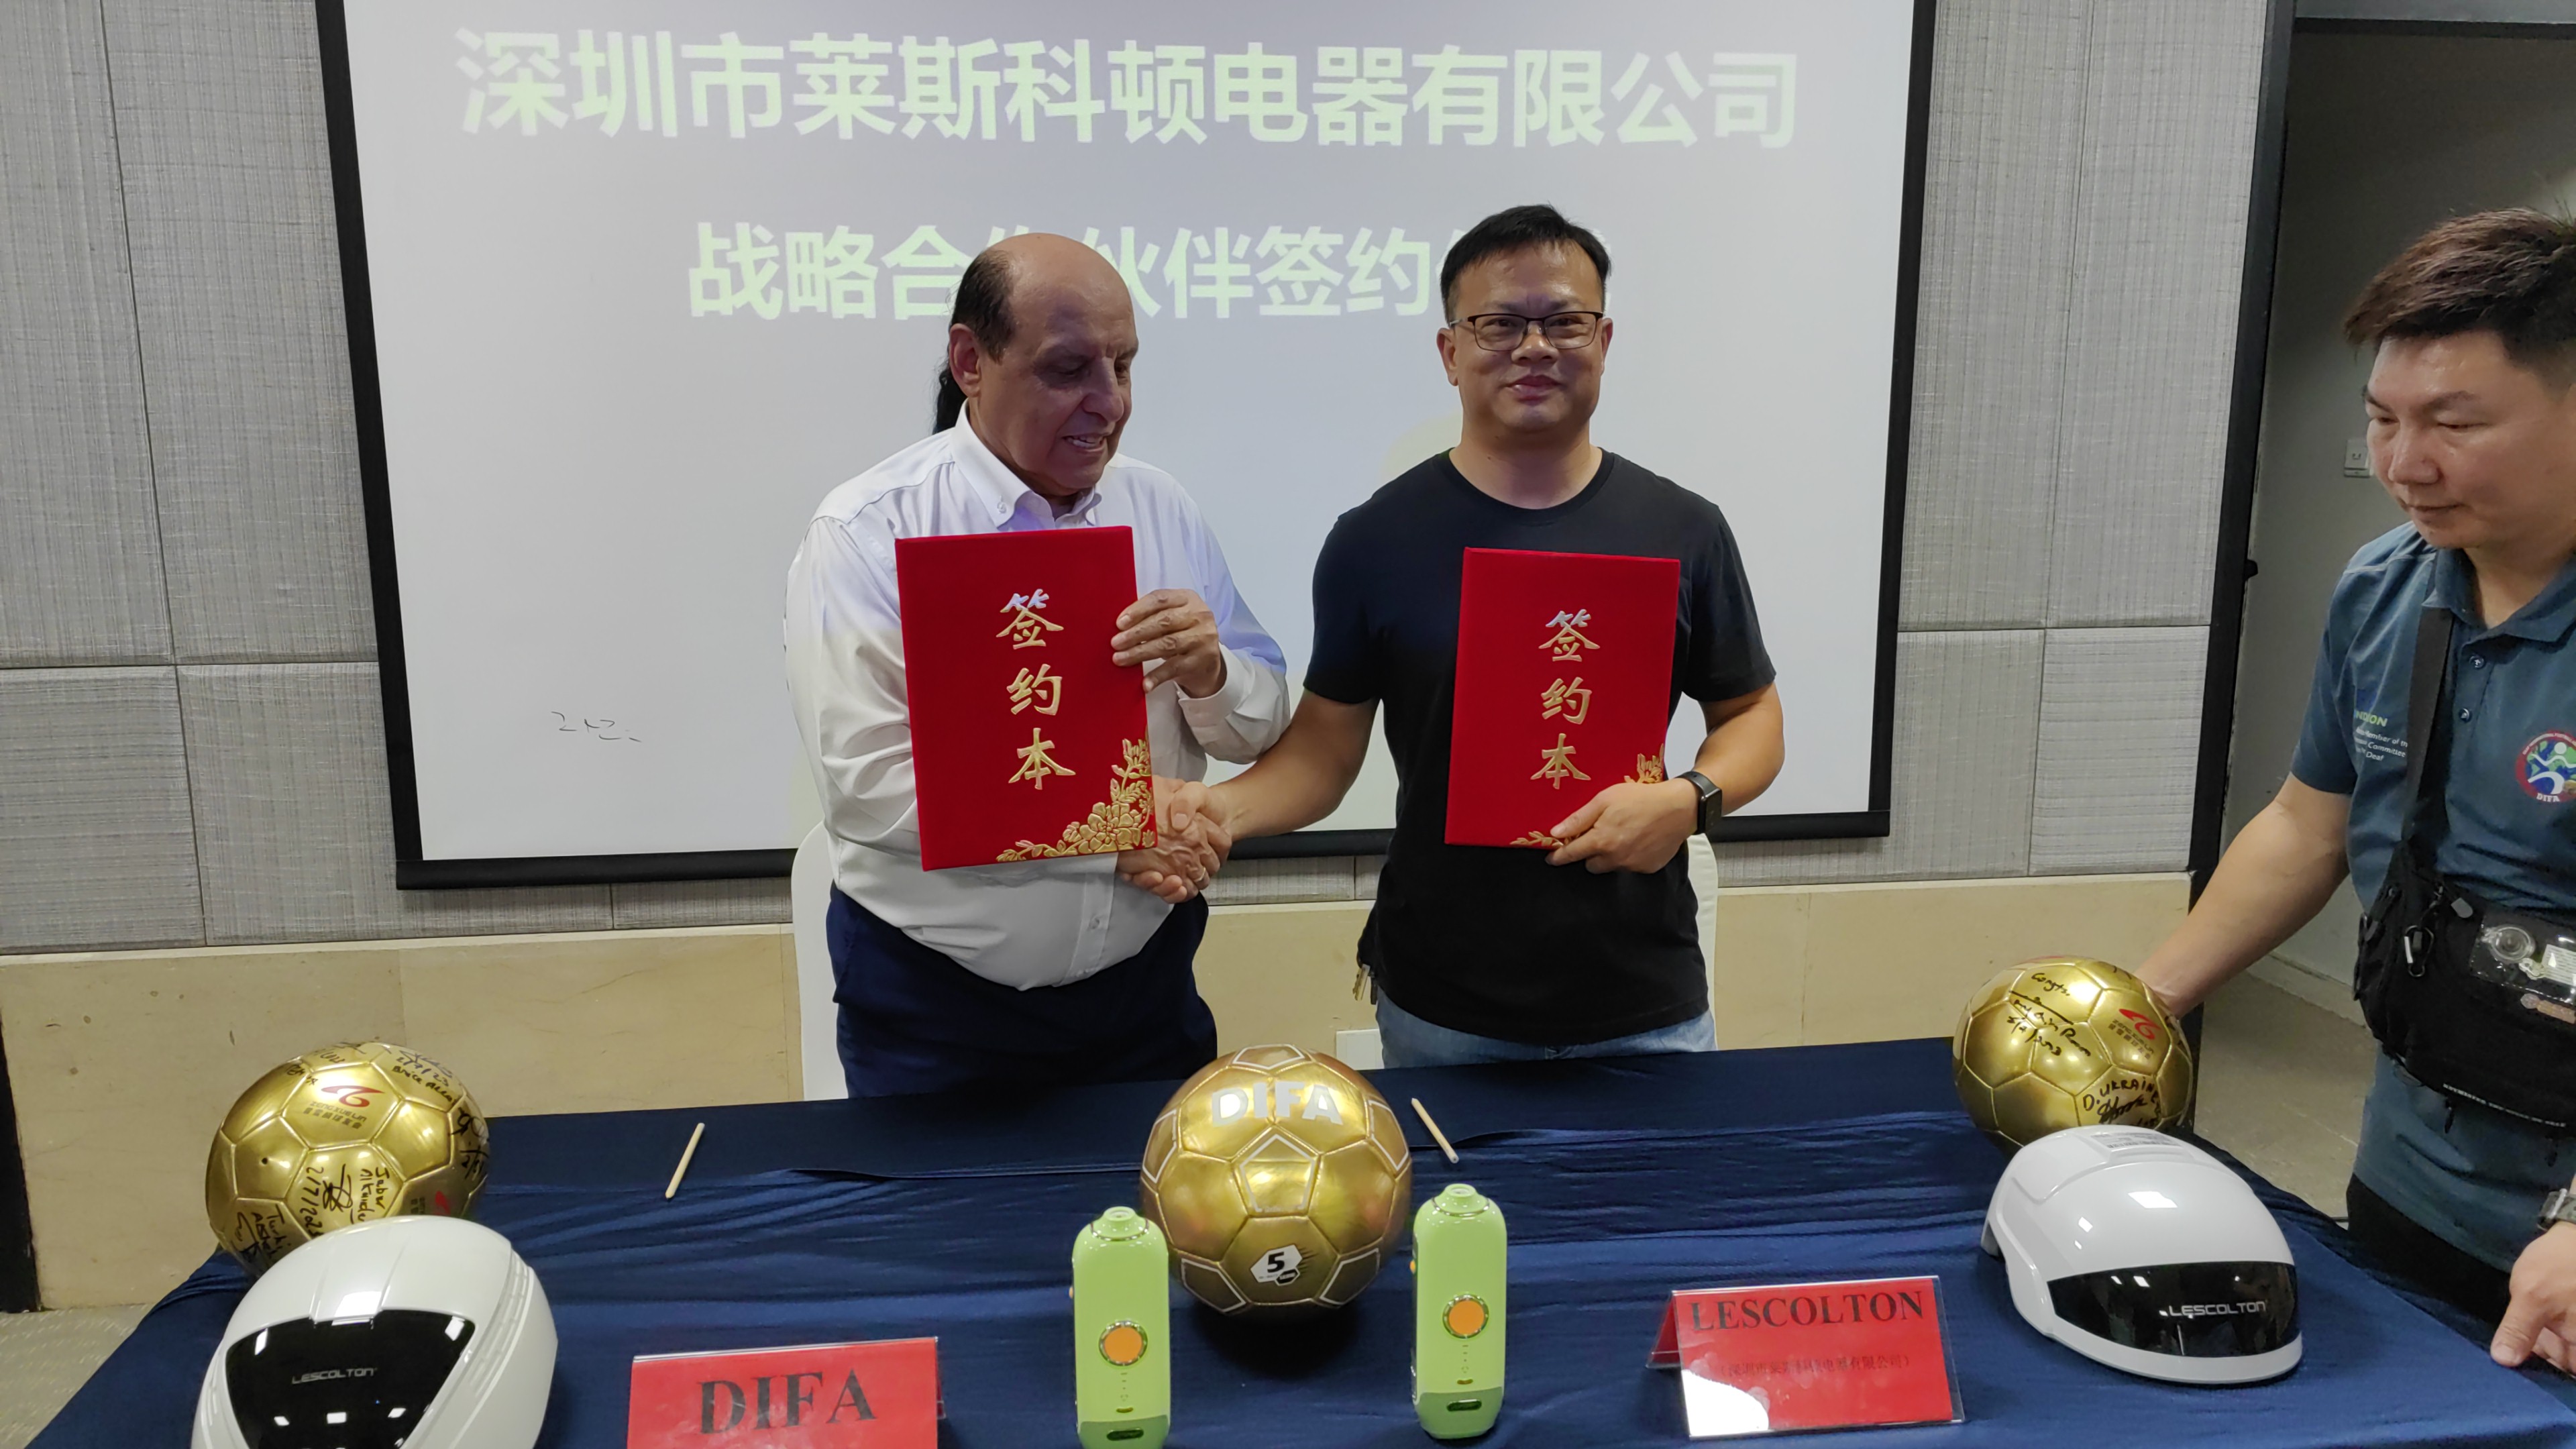 DIFA 聋人国际足球联合会与莱斯科顿电器有限公司达成战略合作伙伴关系